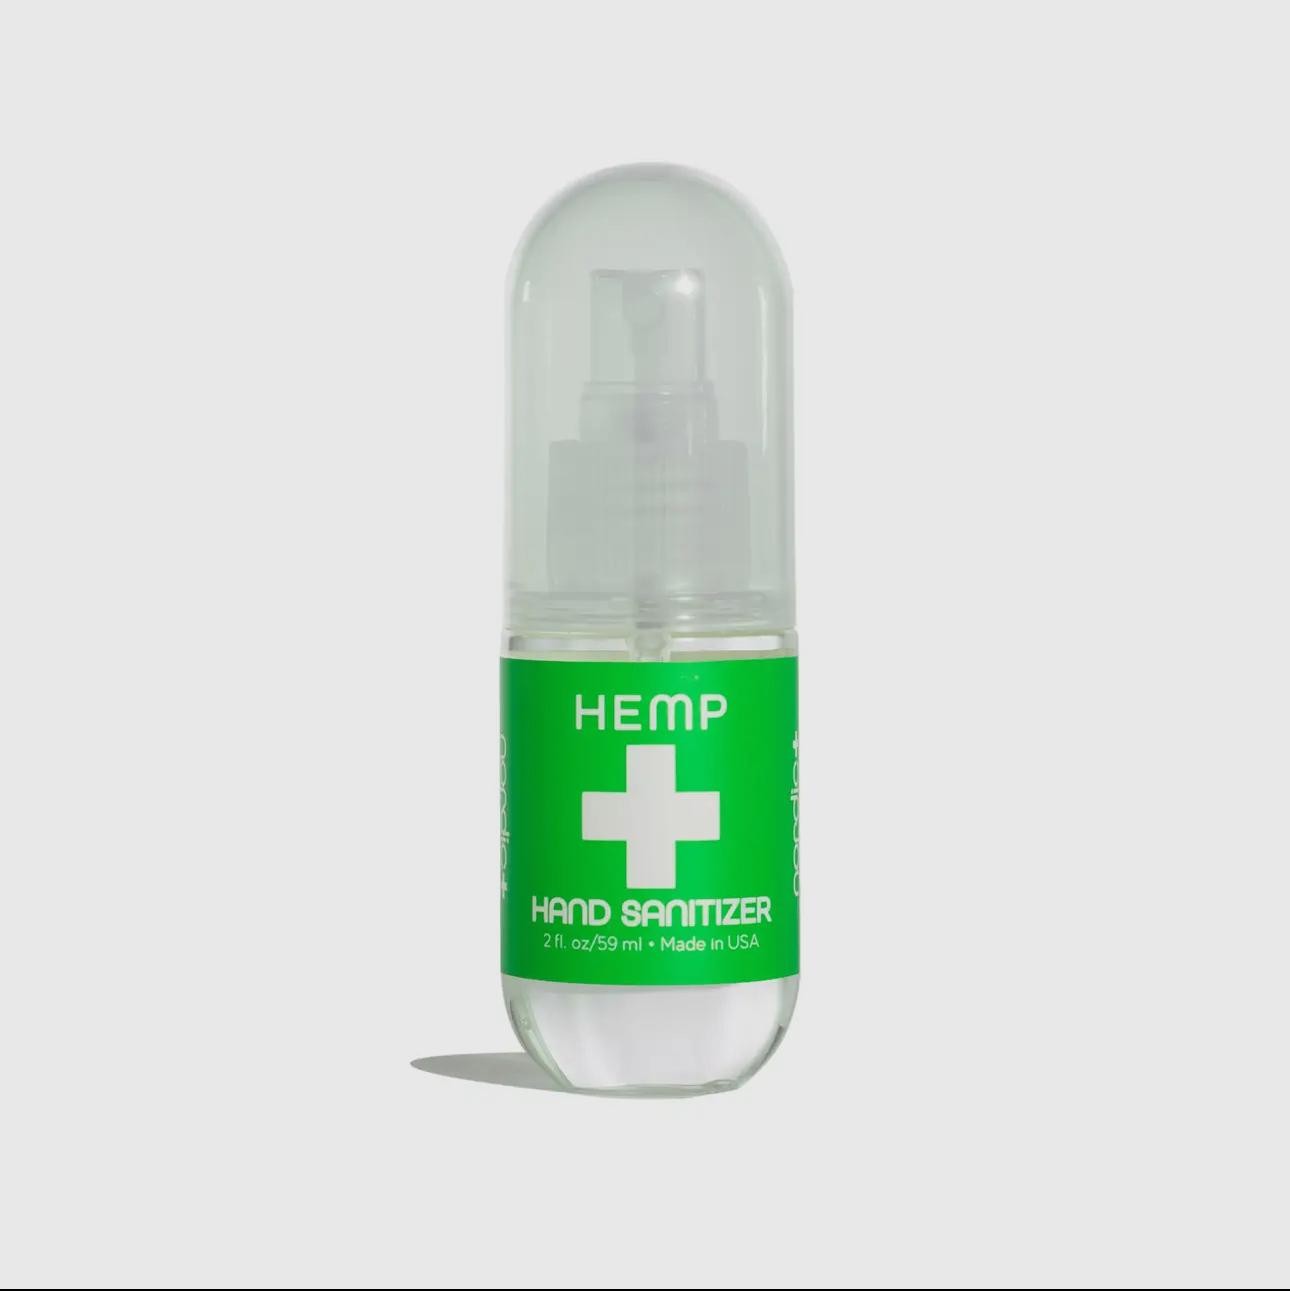 Hand Sanitizer - Hemp